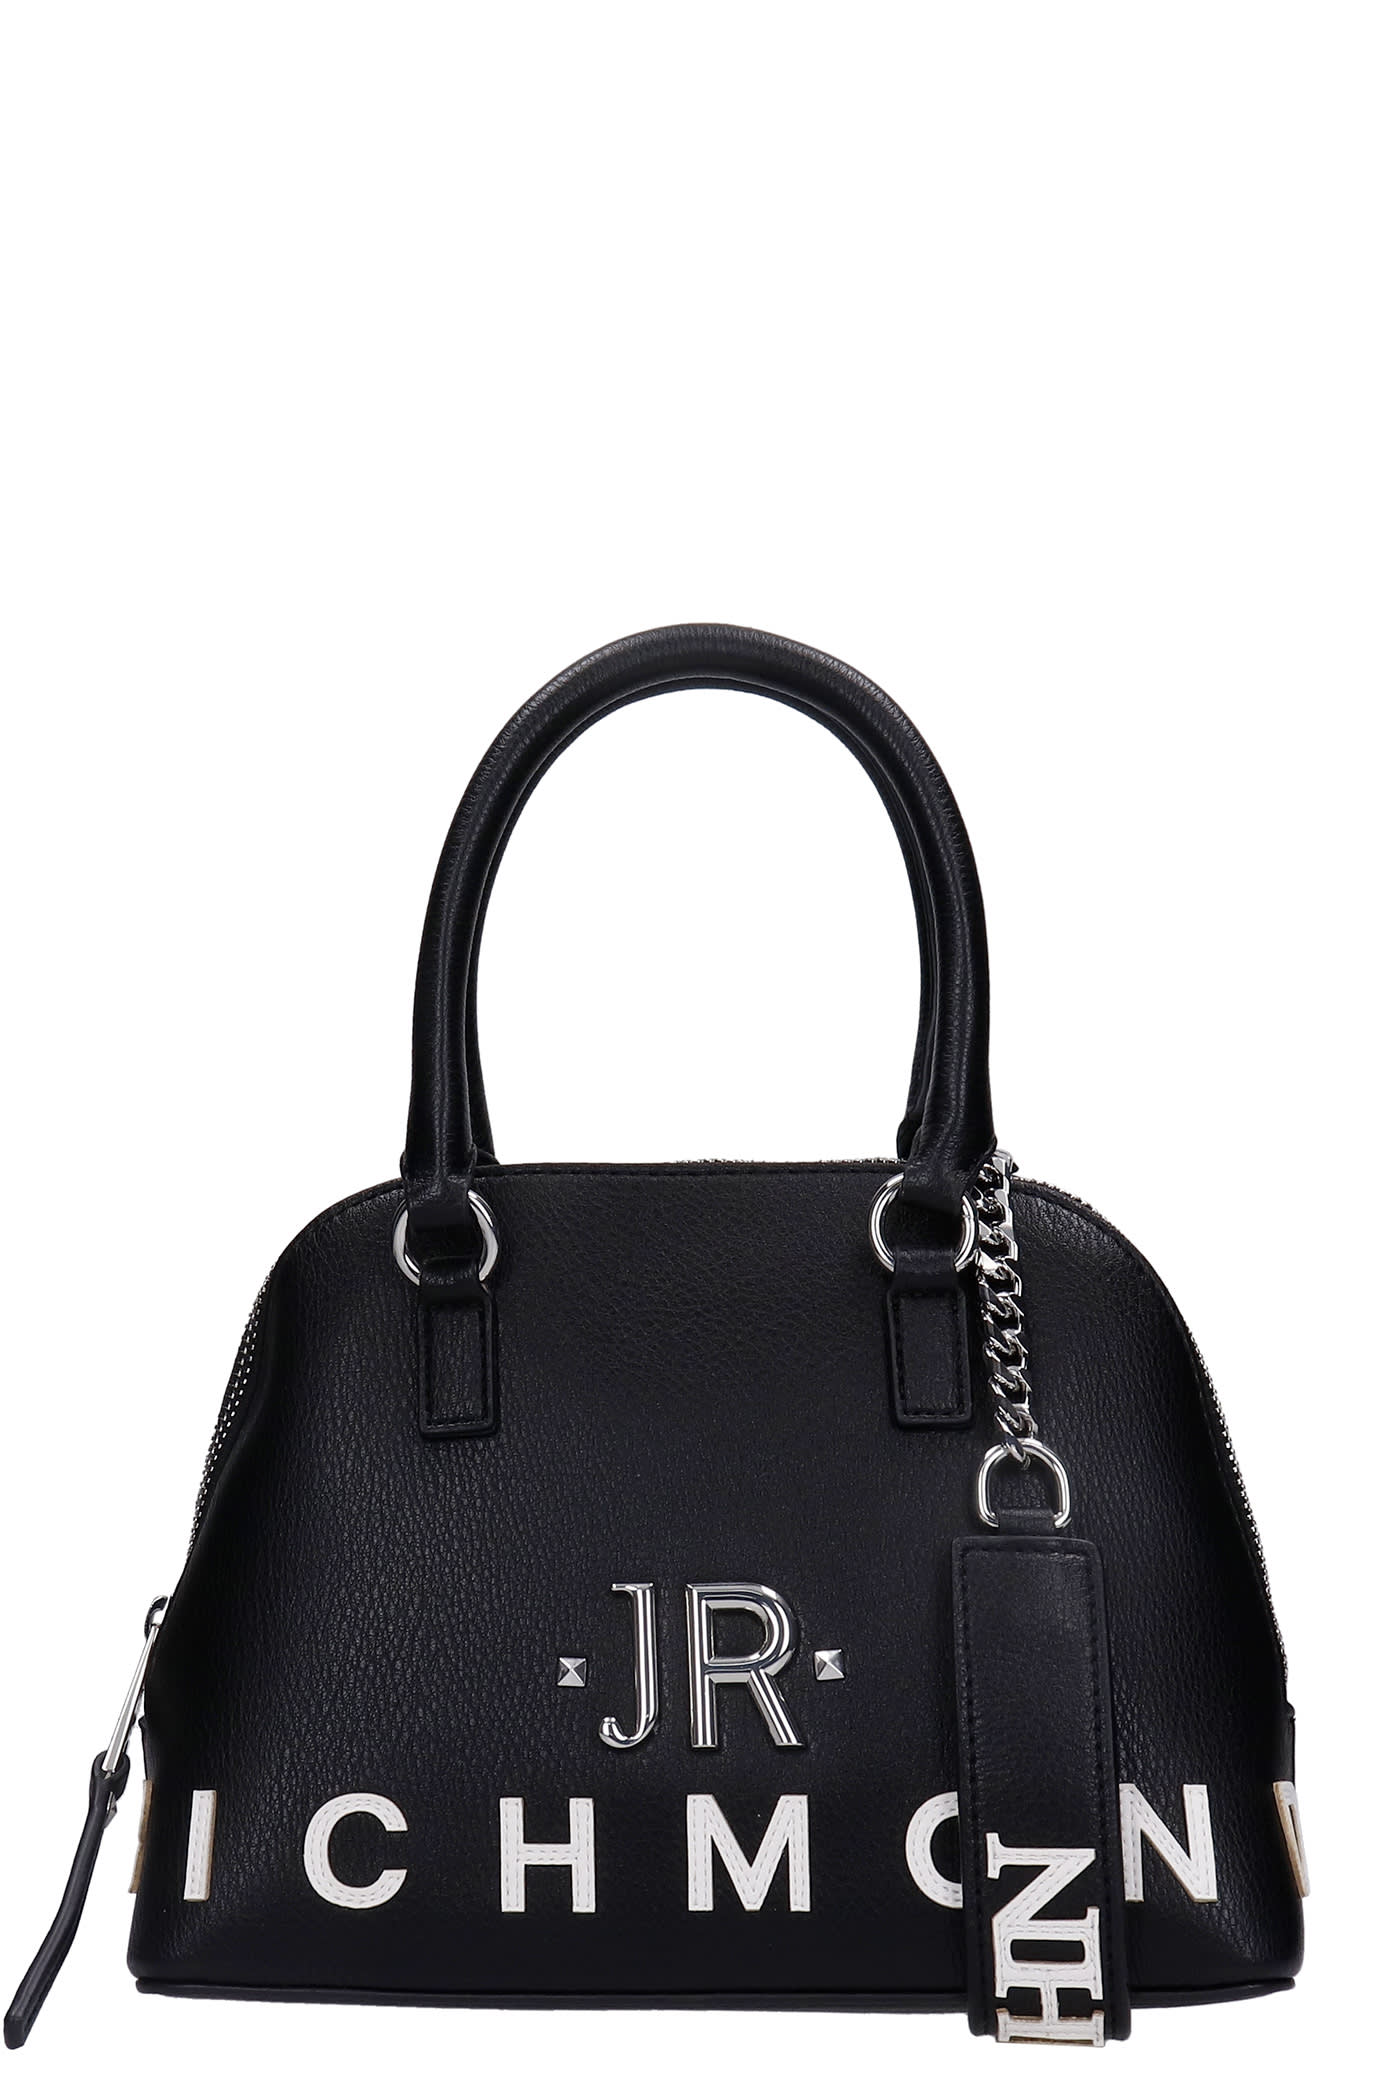 John Richmond Daigua Hand Bag In Black Leather